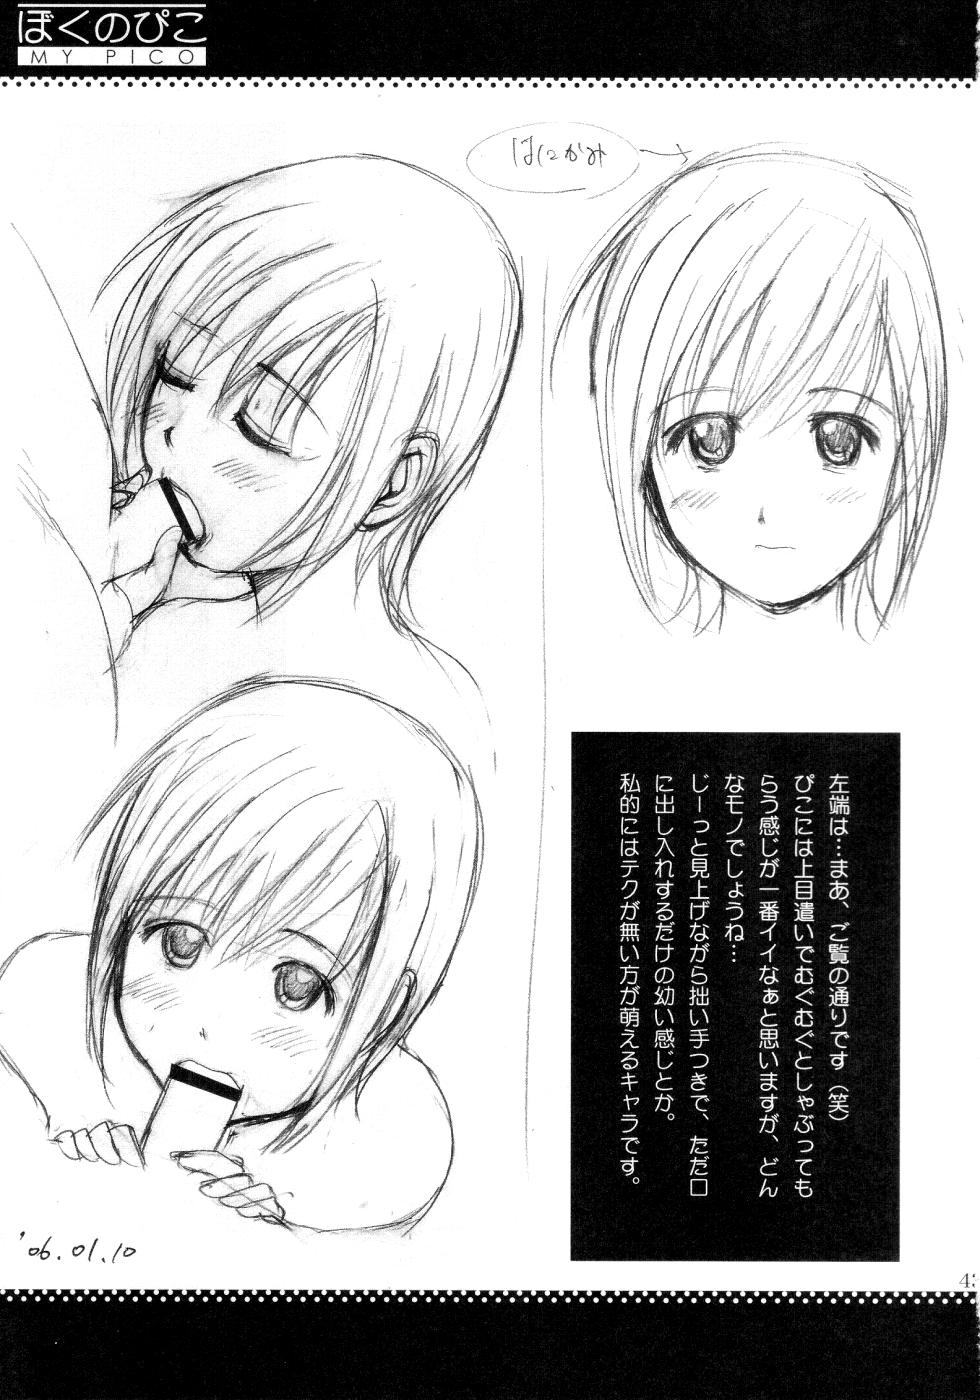 Boku no Pico Comic + Koushiki Character Genanshuu 42